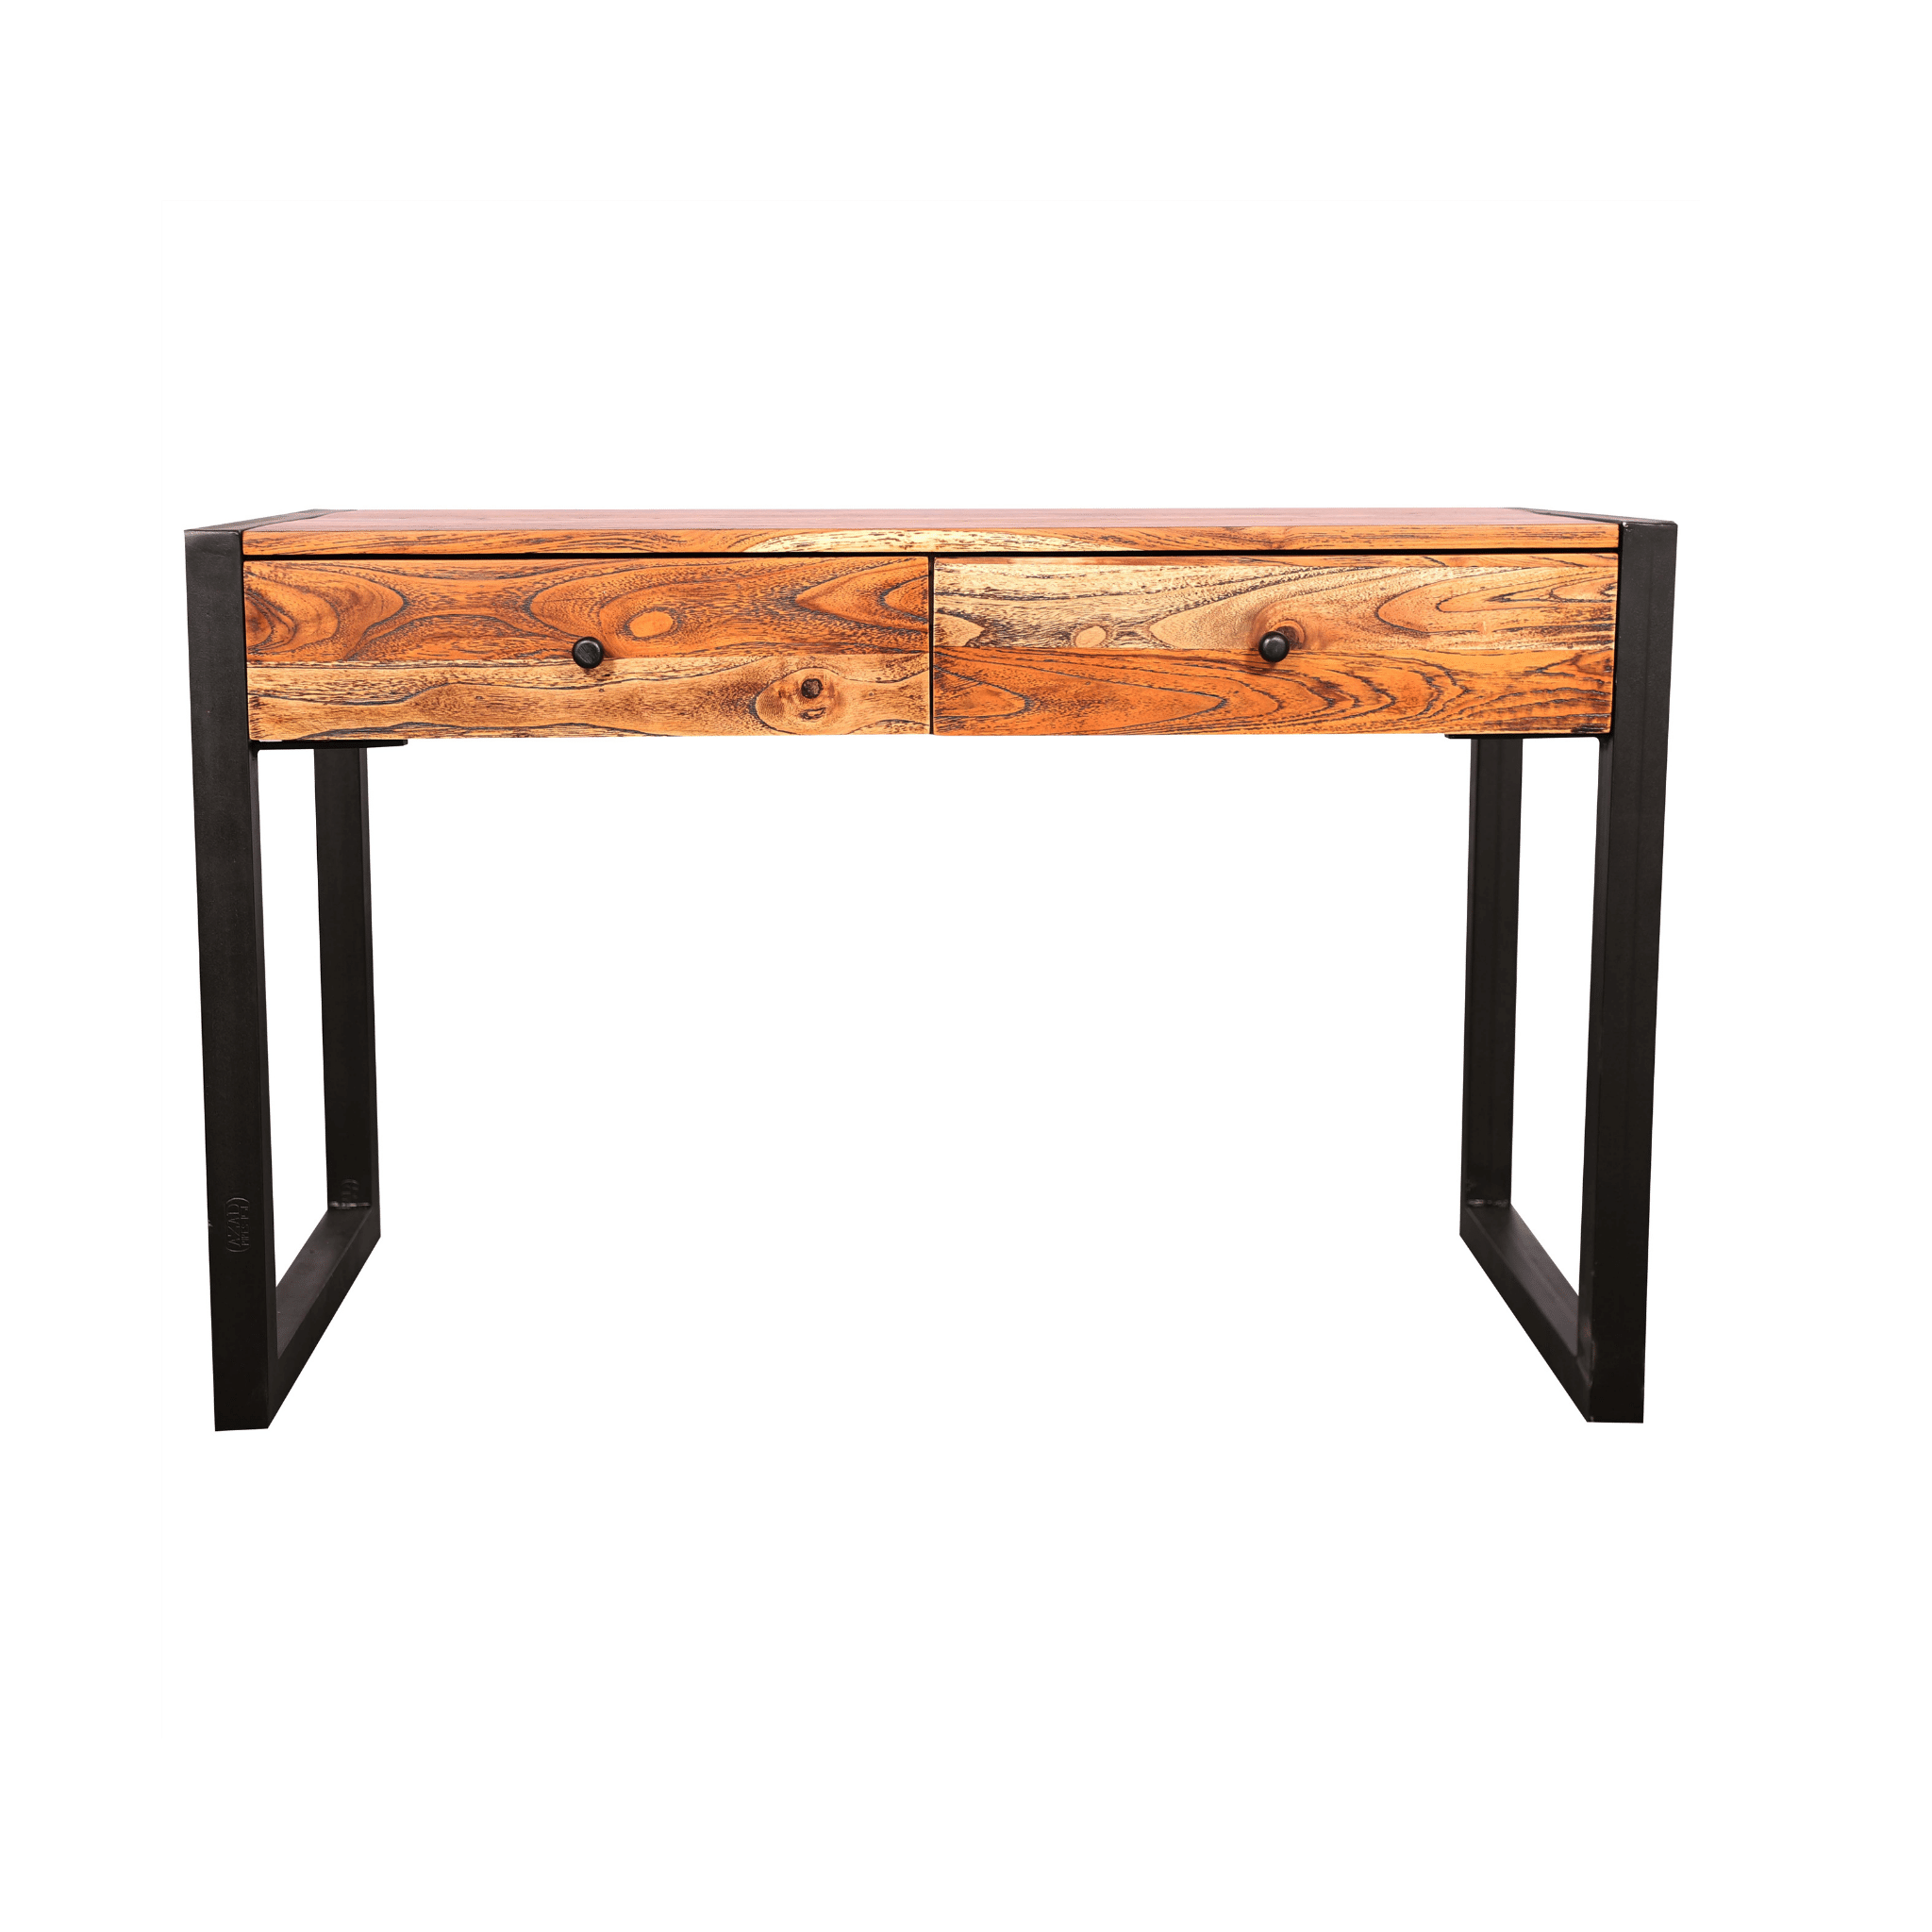 Sagwan vintage design hall 2 drawers and storage shelf console table study table weatherwood finish on wooden box